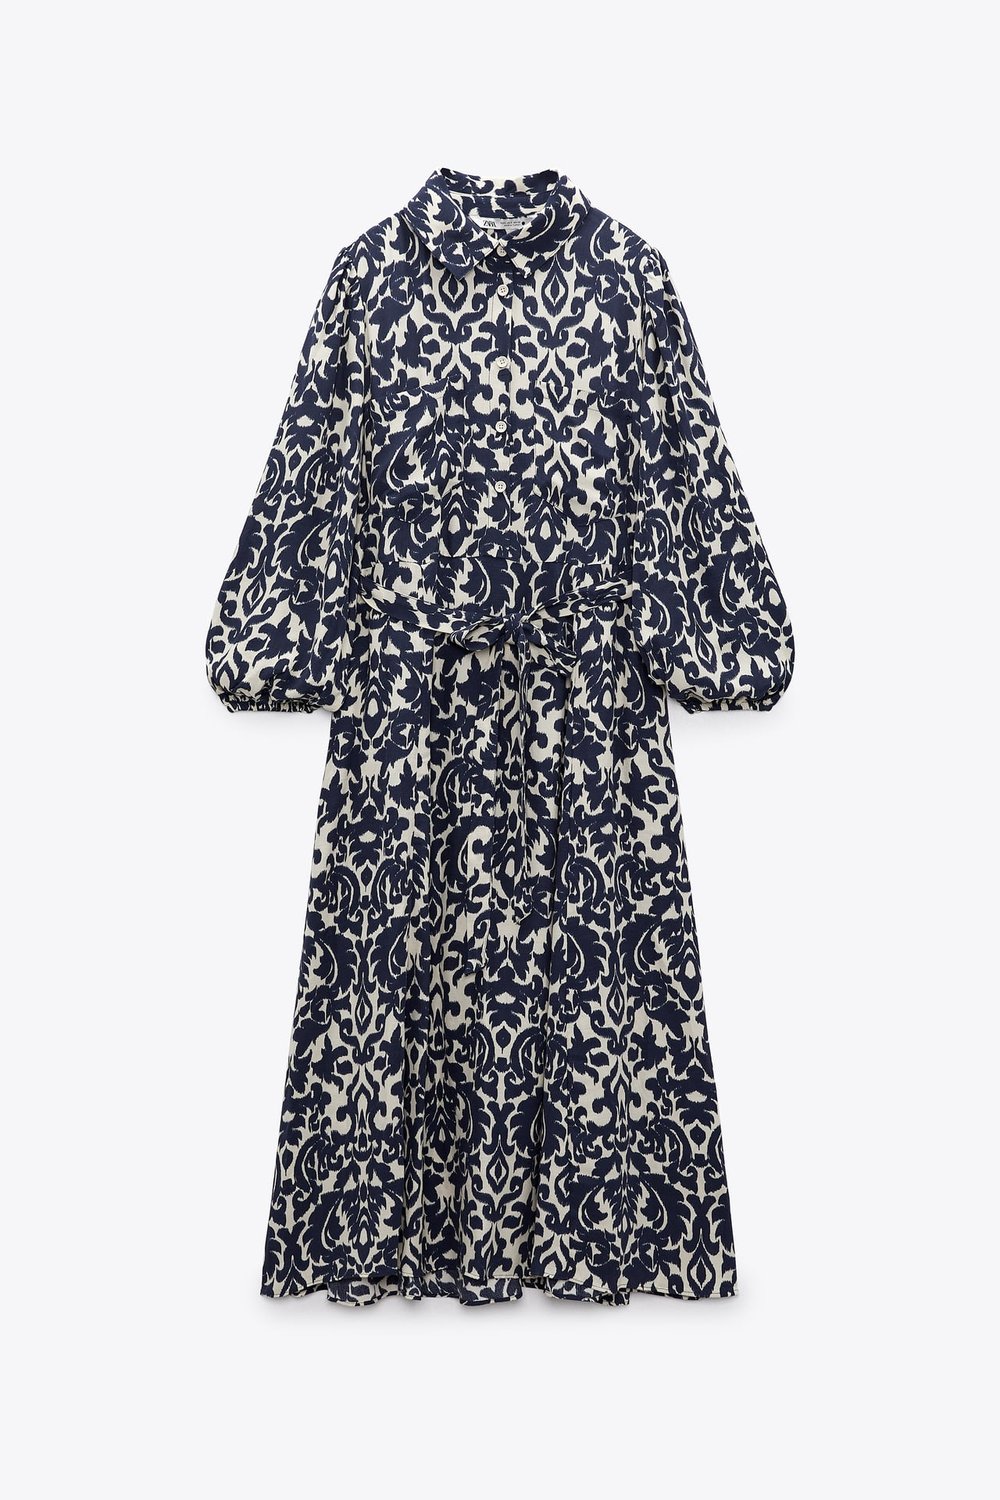 Zara Printed Midi Dress — UFO No More